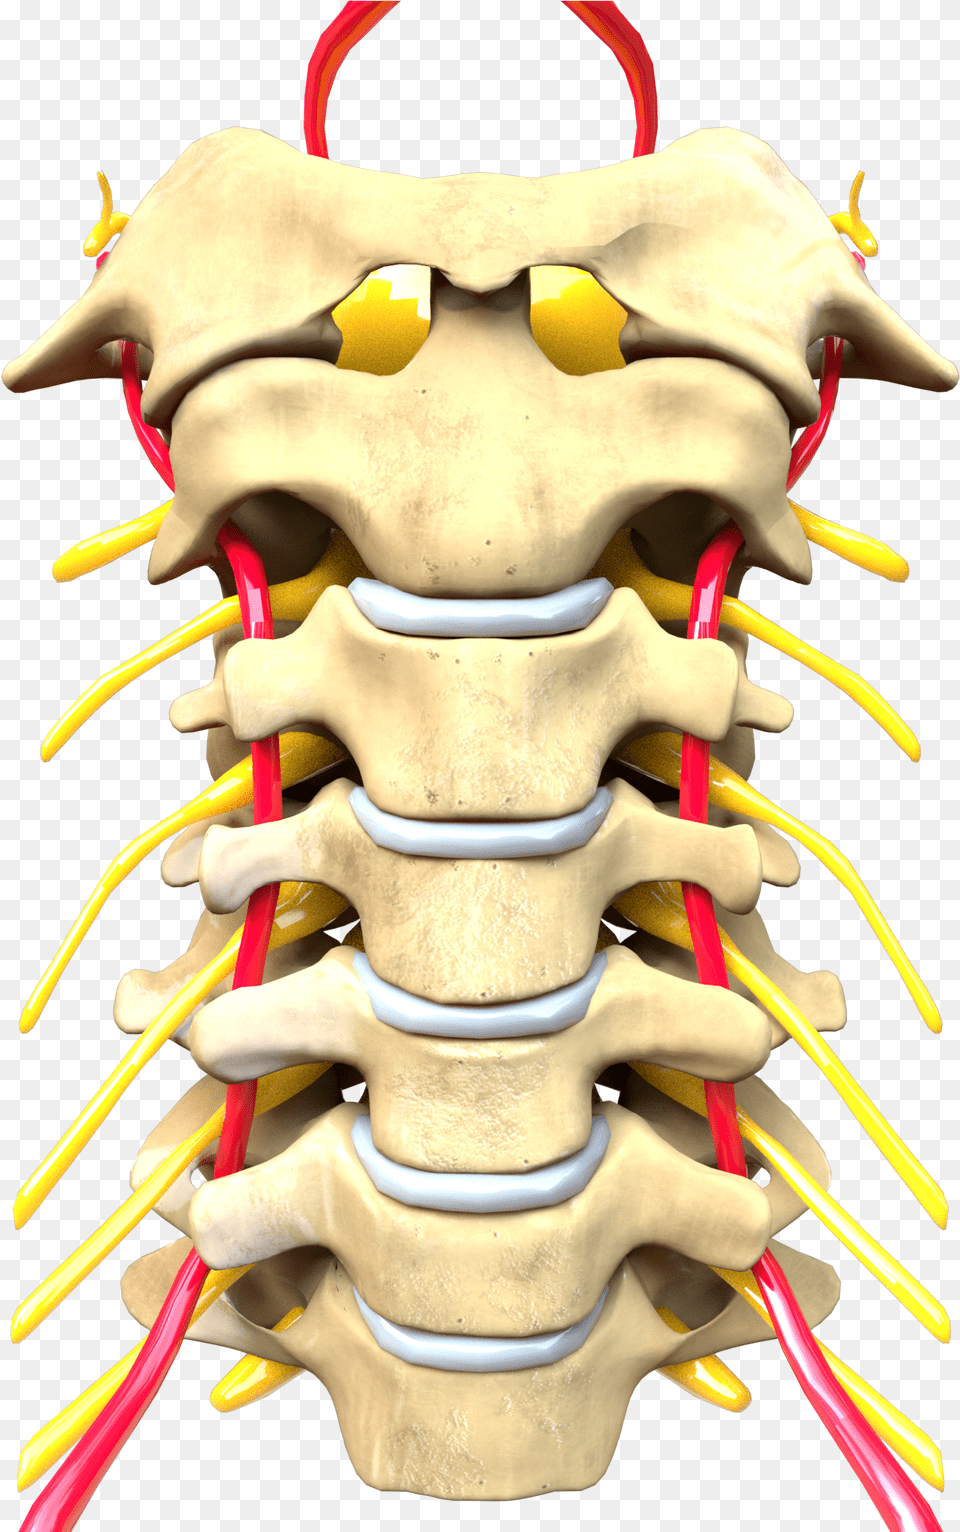 Cervical Spine Computer Generated Image Vertebras Cervicales, Body Part, Person, Torso, Head Free Transparent Png